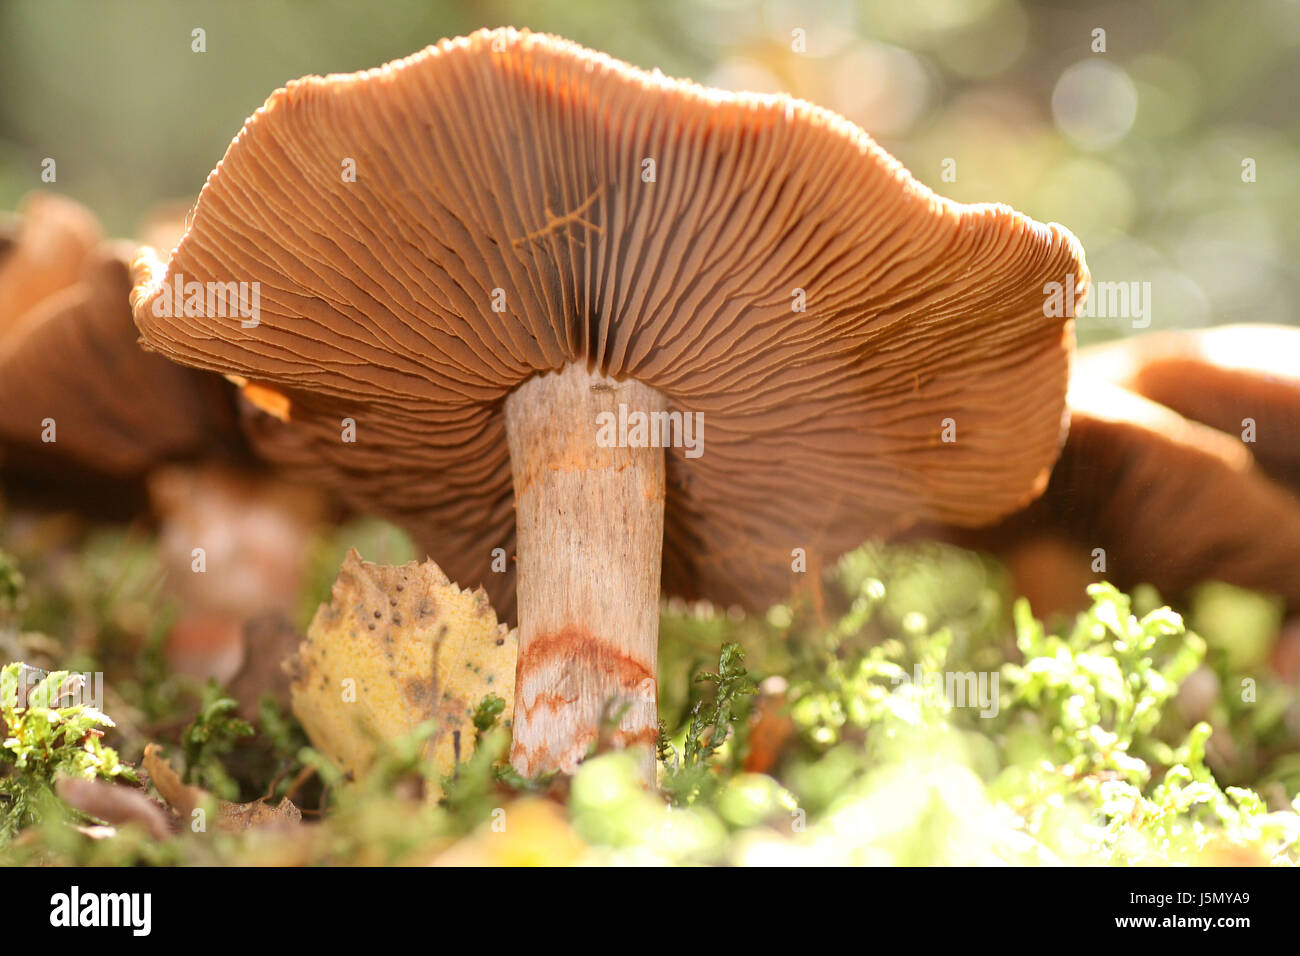 worms eye moss mushrooms mushroom fungus belt underside geschmckter grtelfu Stock Photo